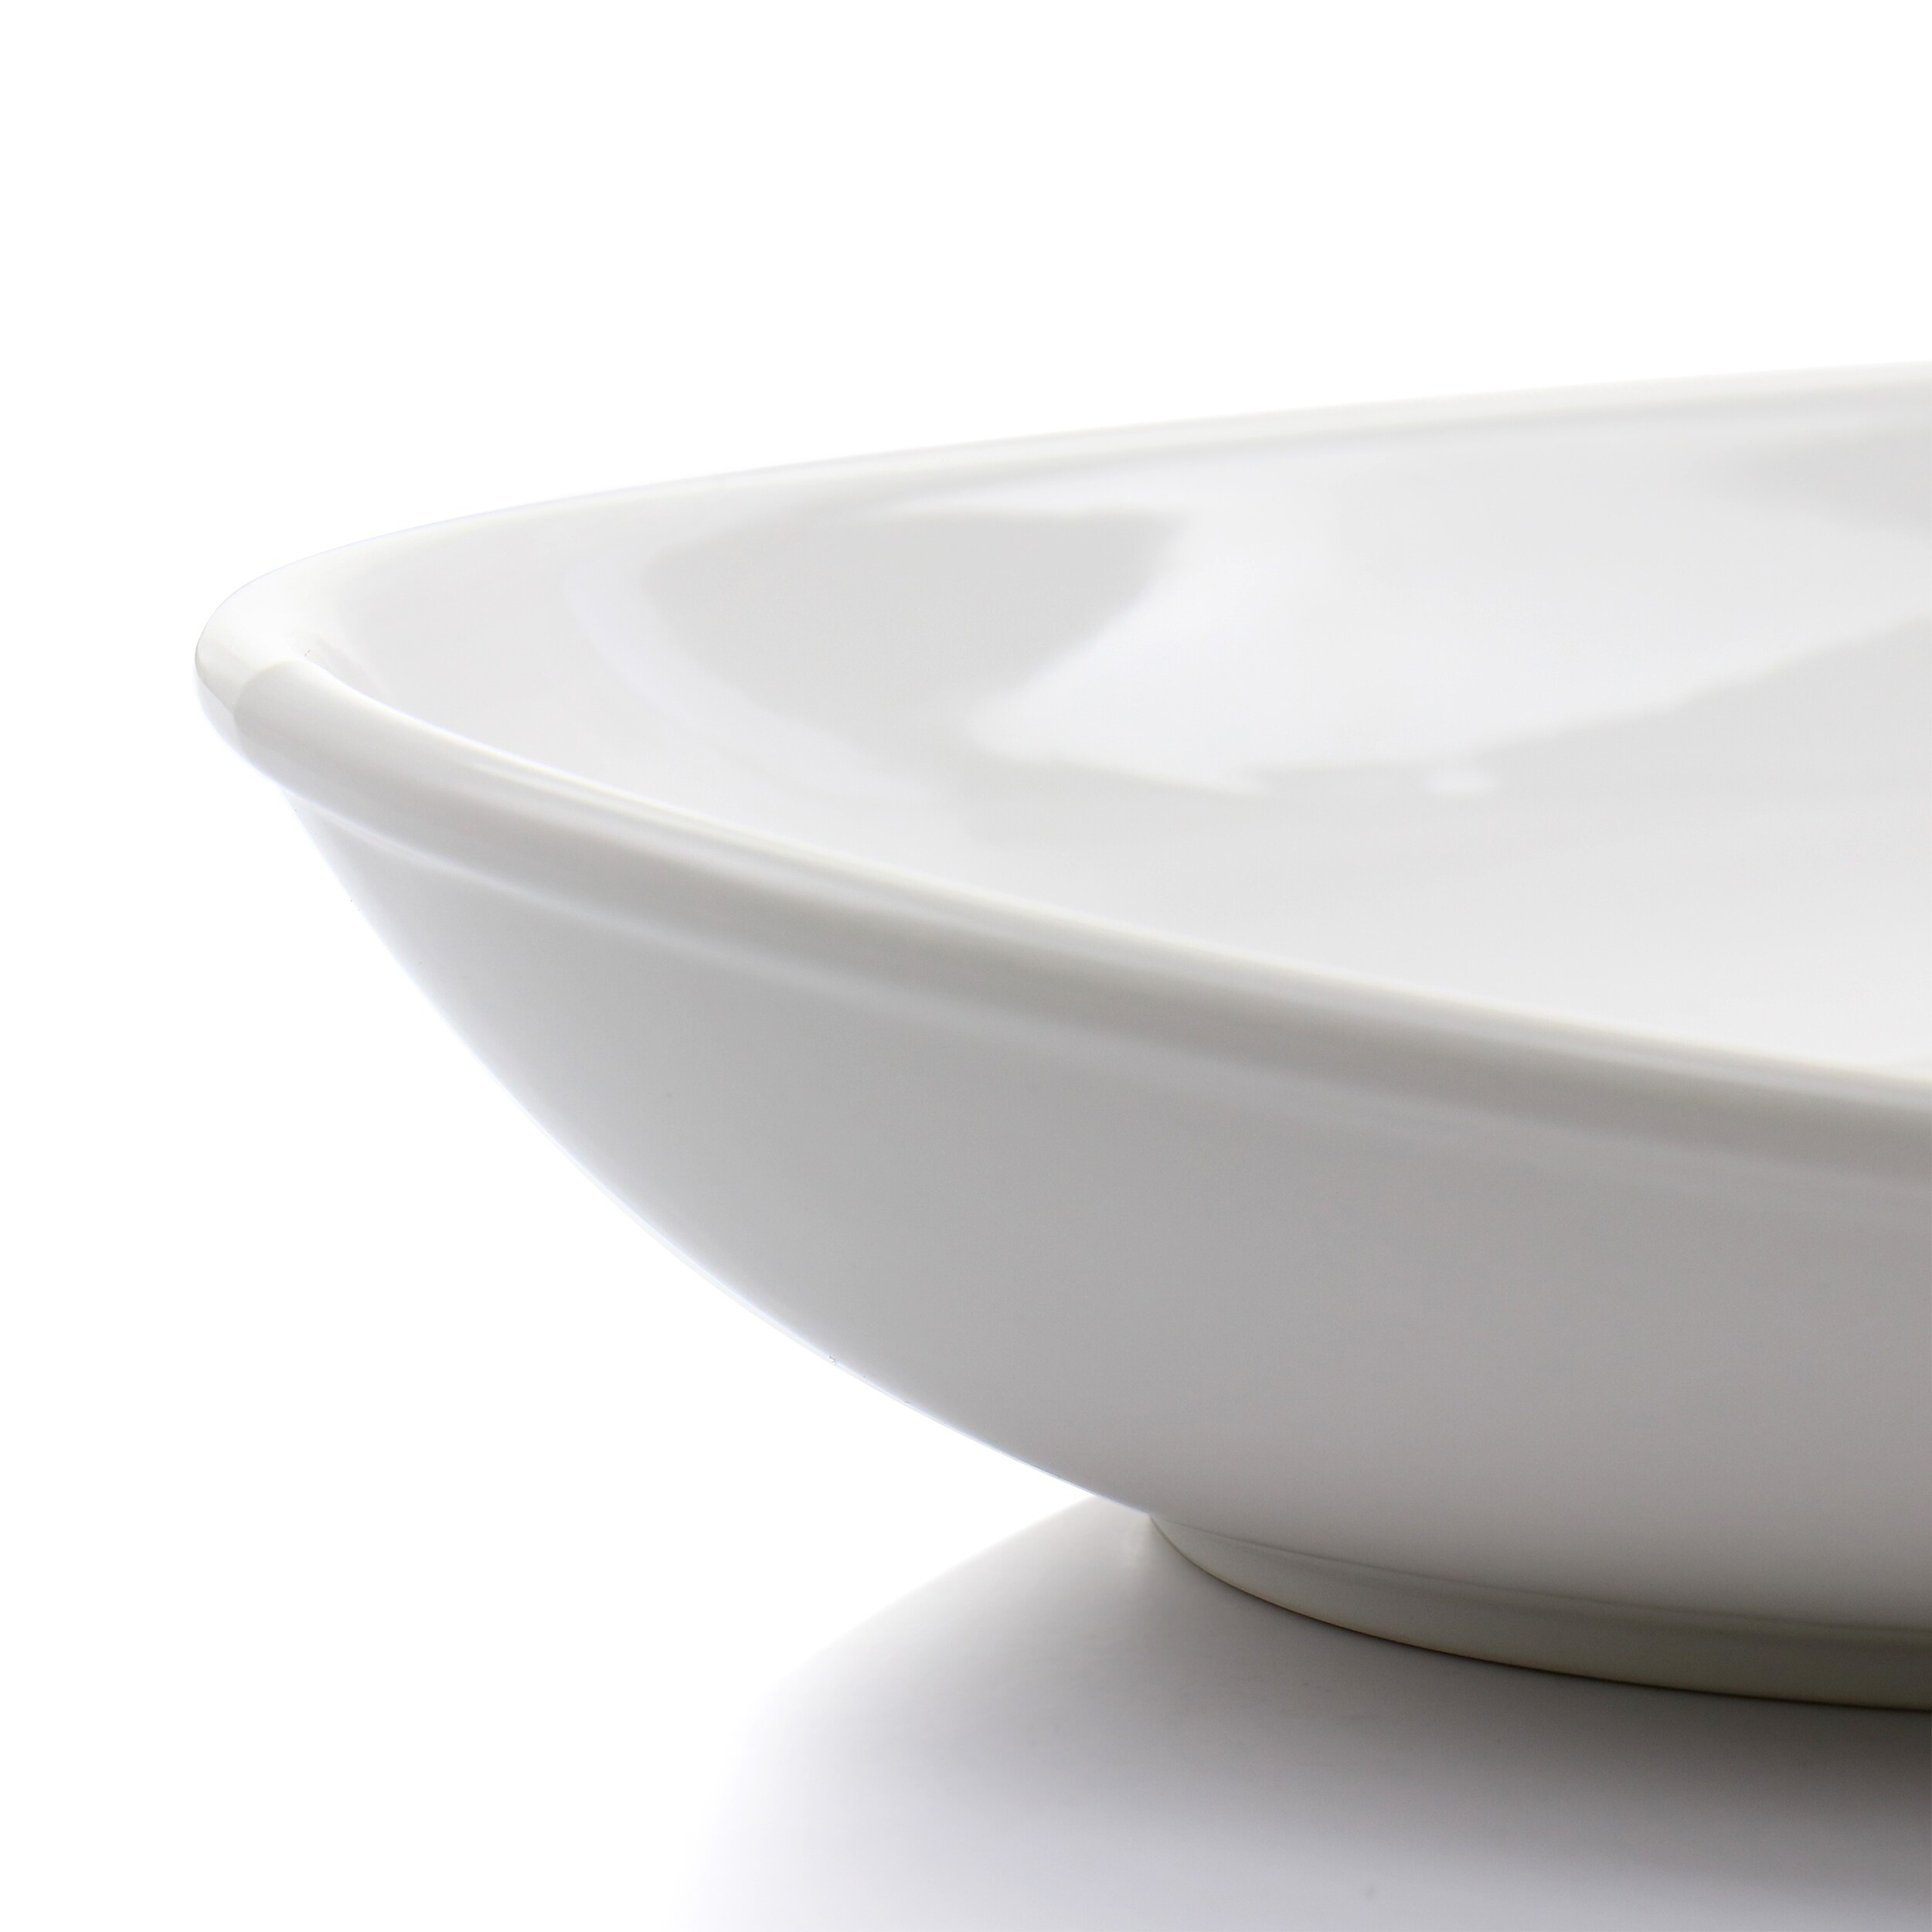 Denmark Tools for Cooks 3pc Porcelain 2-Tier Serving Set